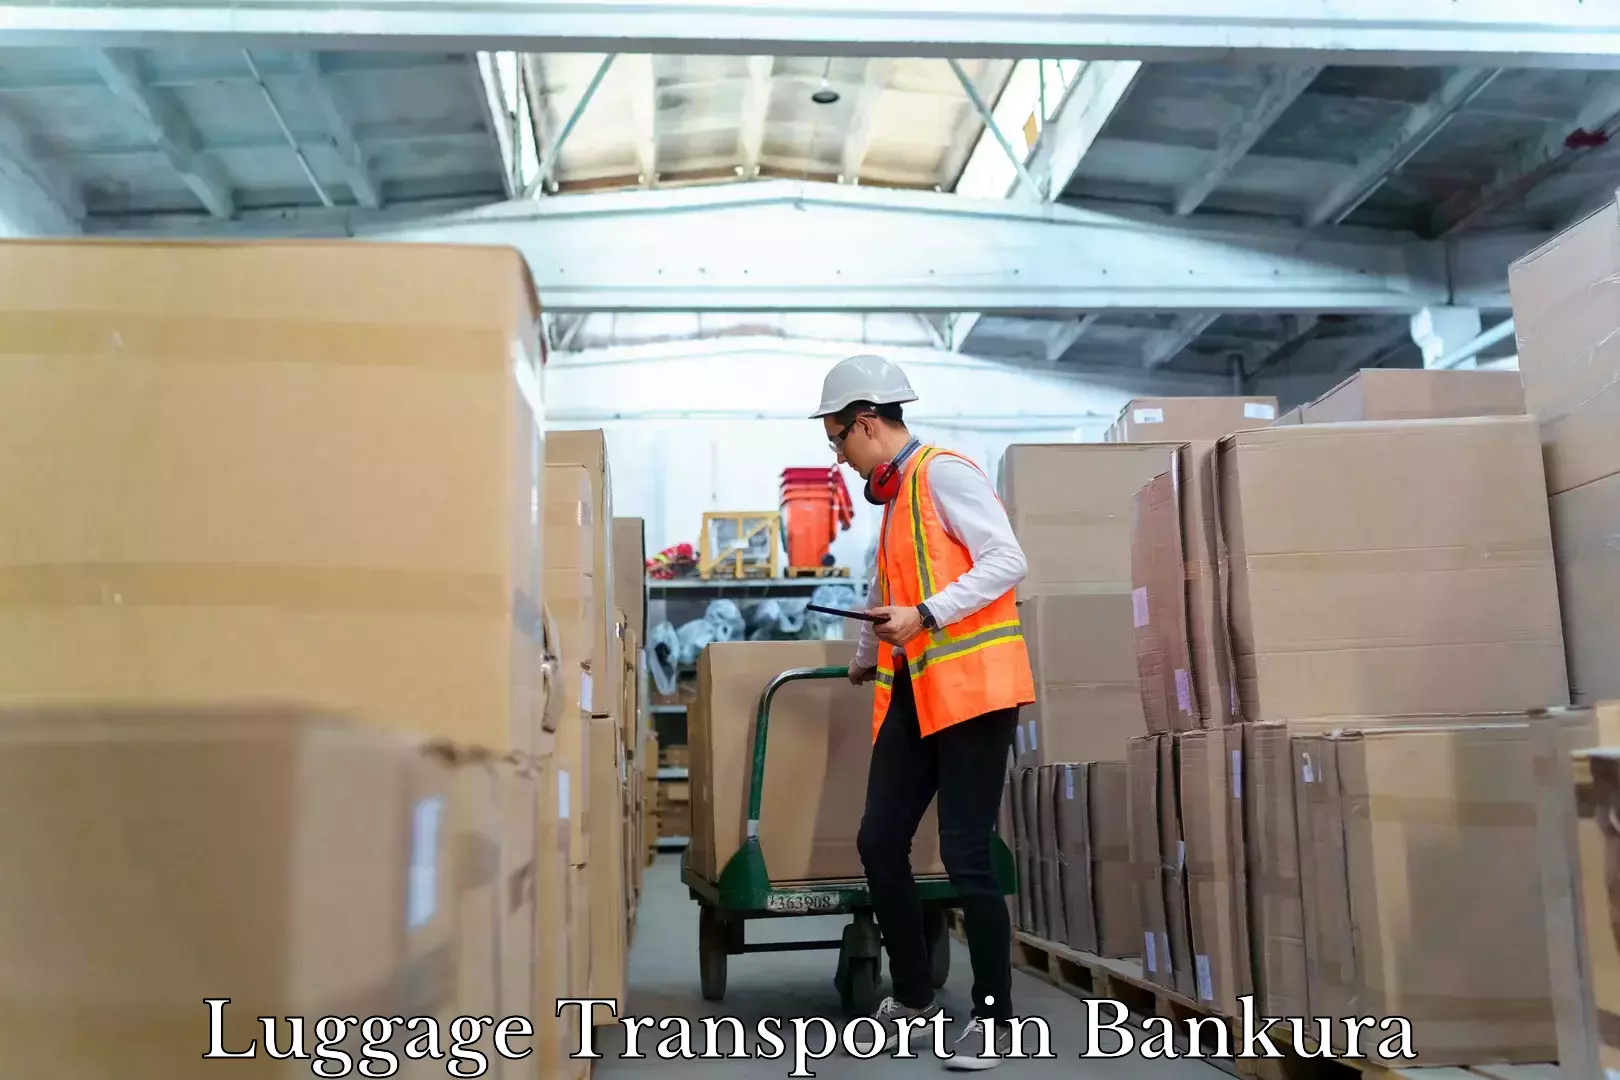 Baggage relocation service in Bankura